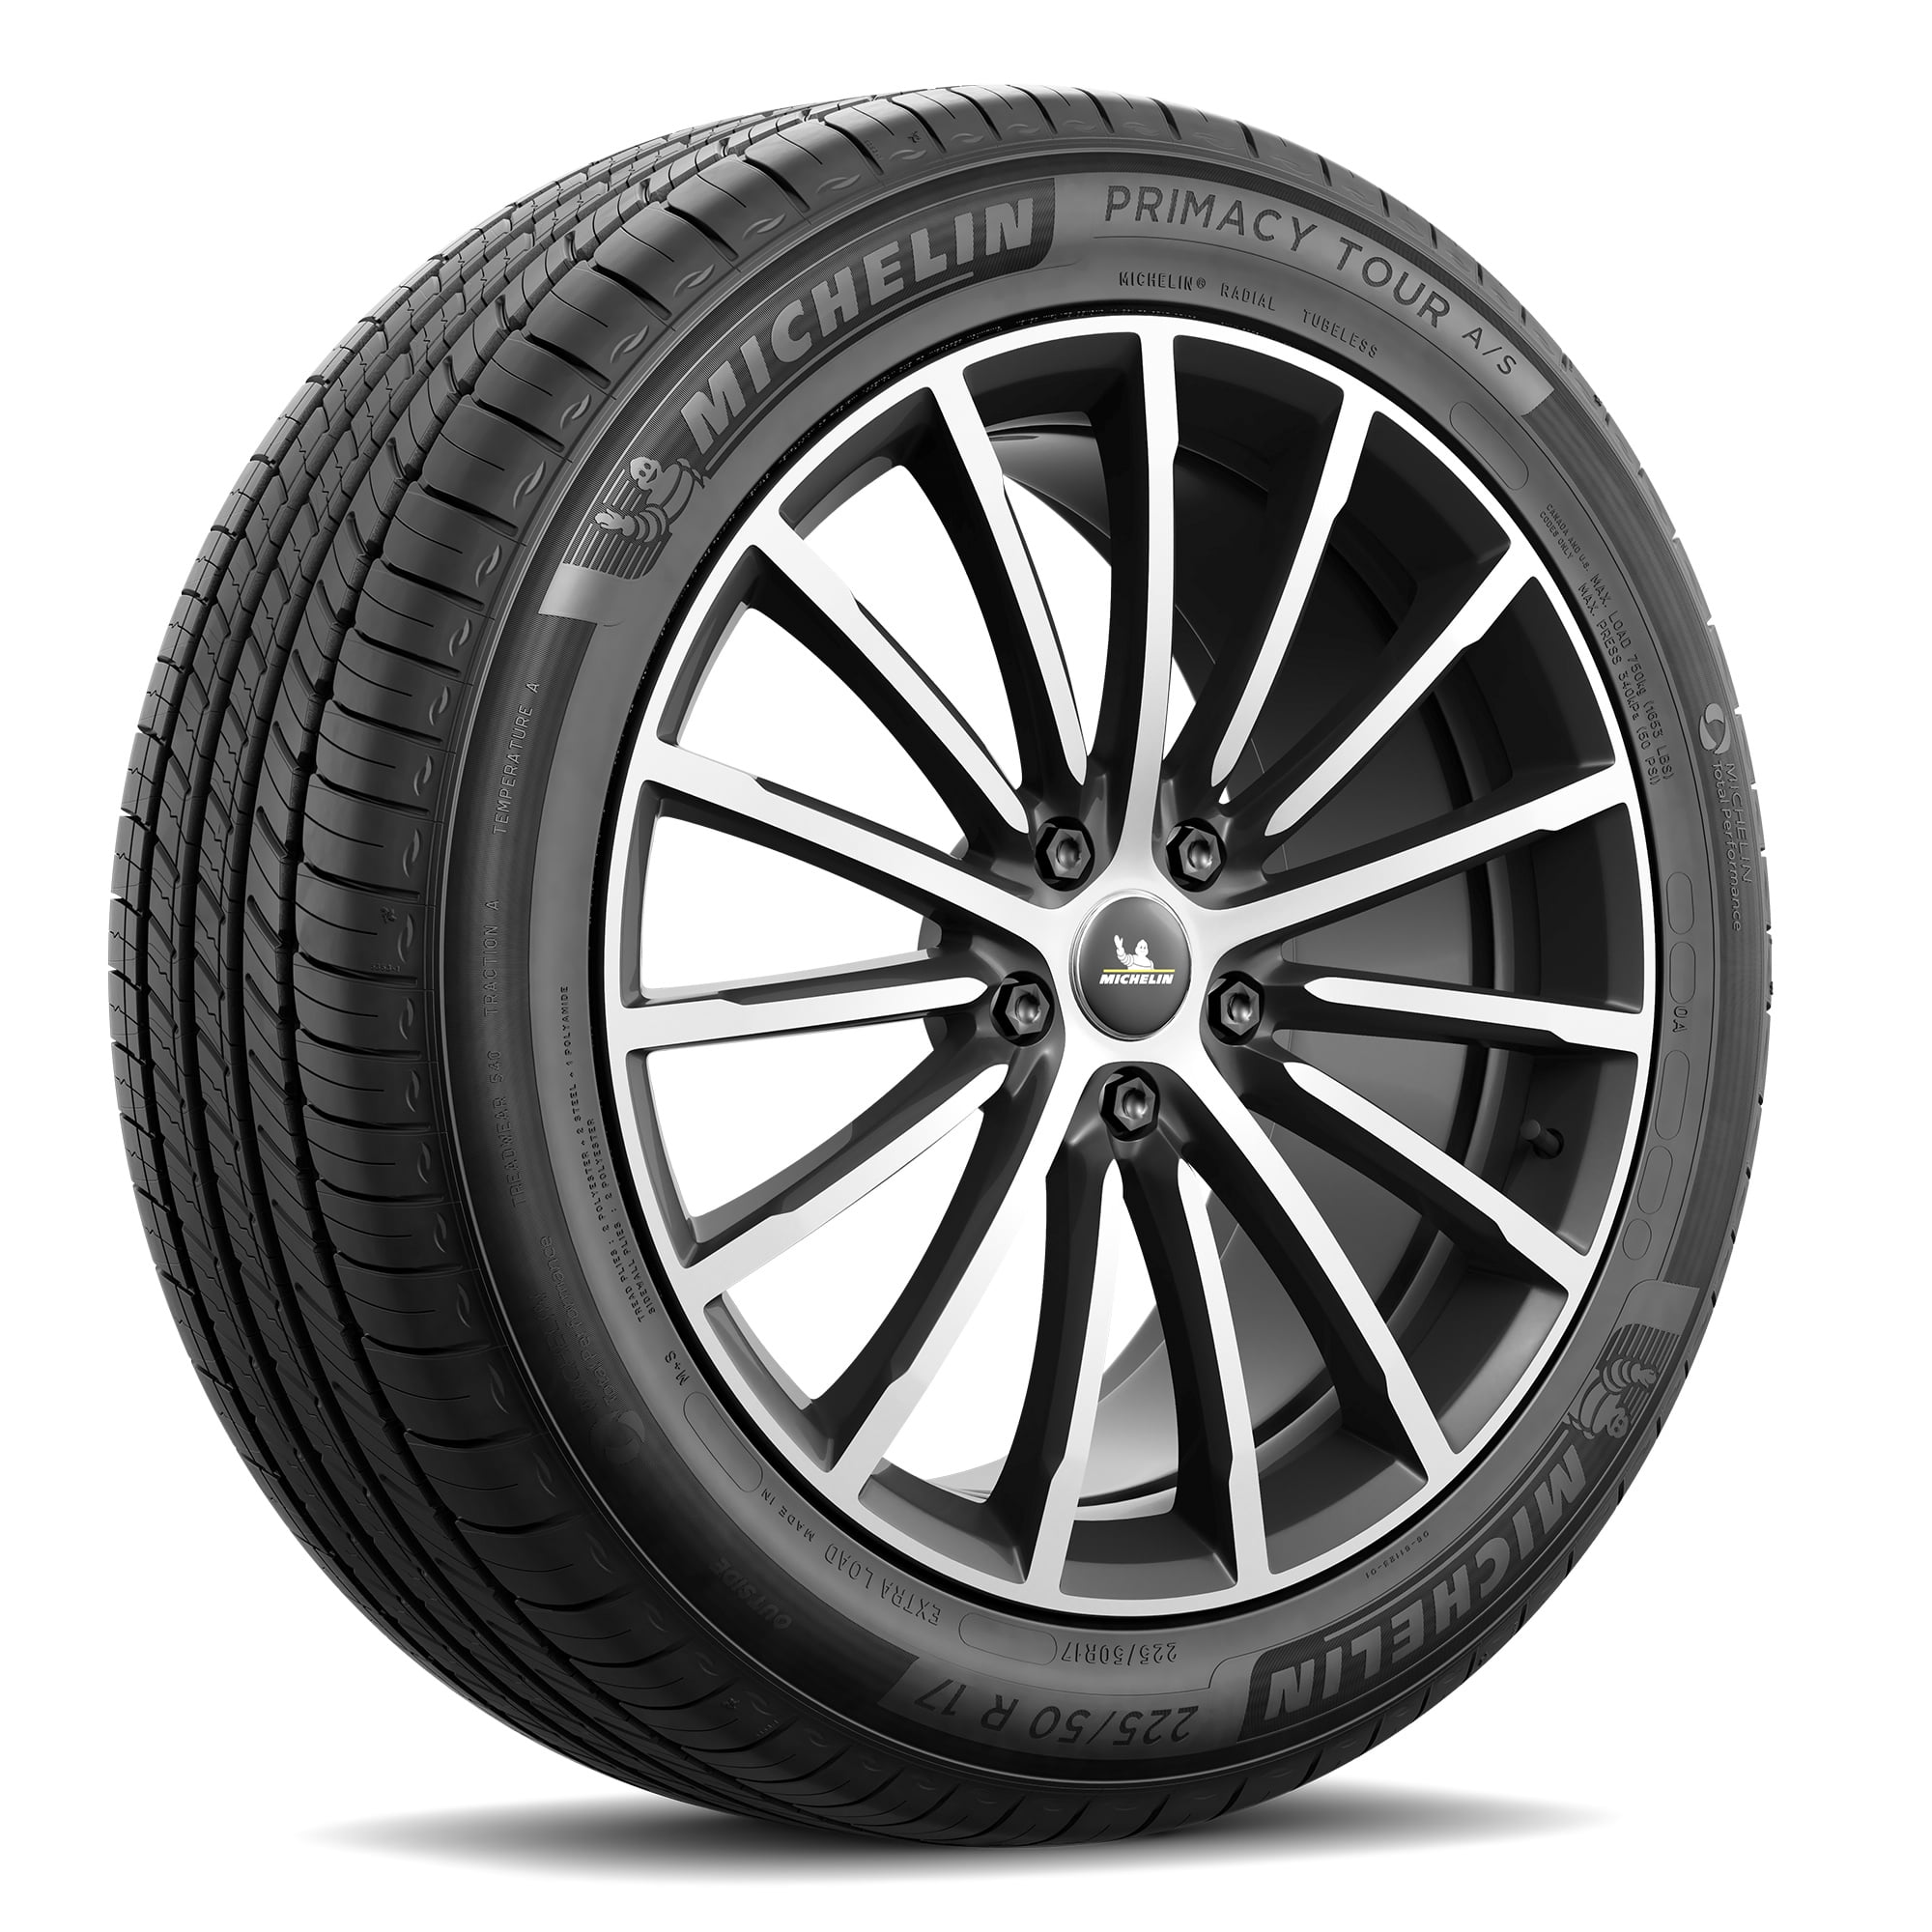 Michelin X-Ice Xi3 225/55R18 98 H Tire